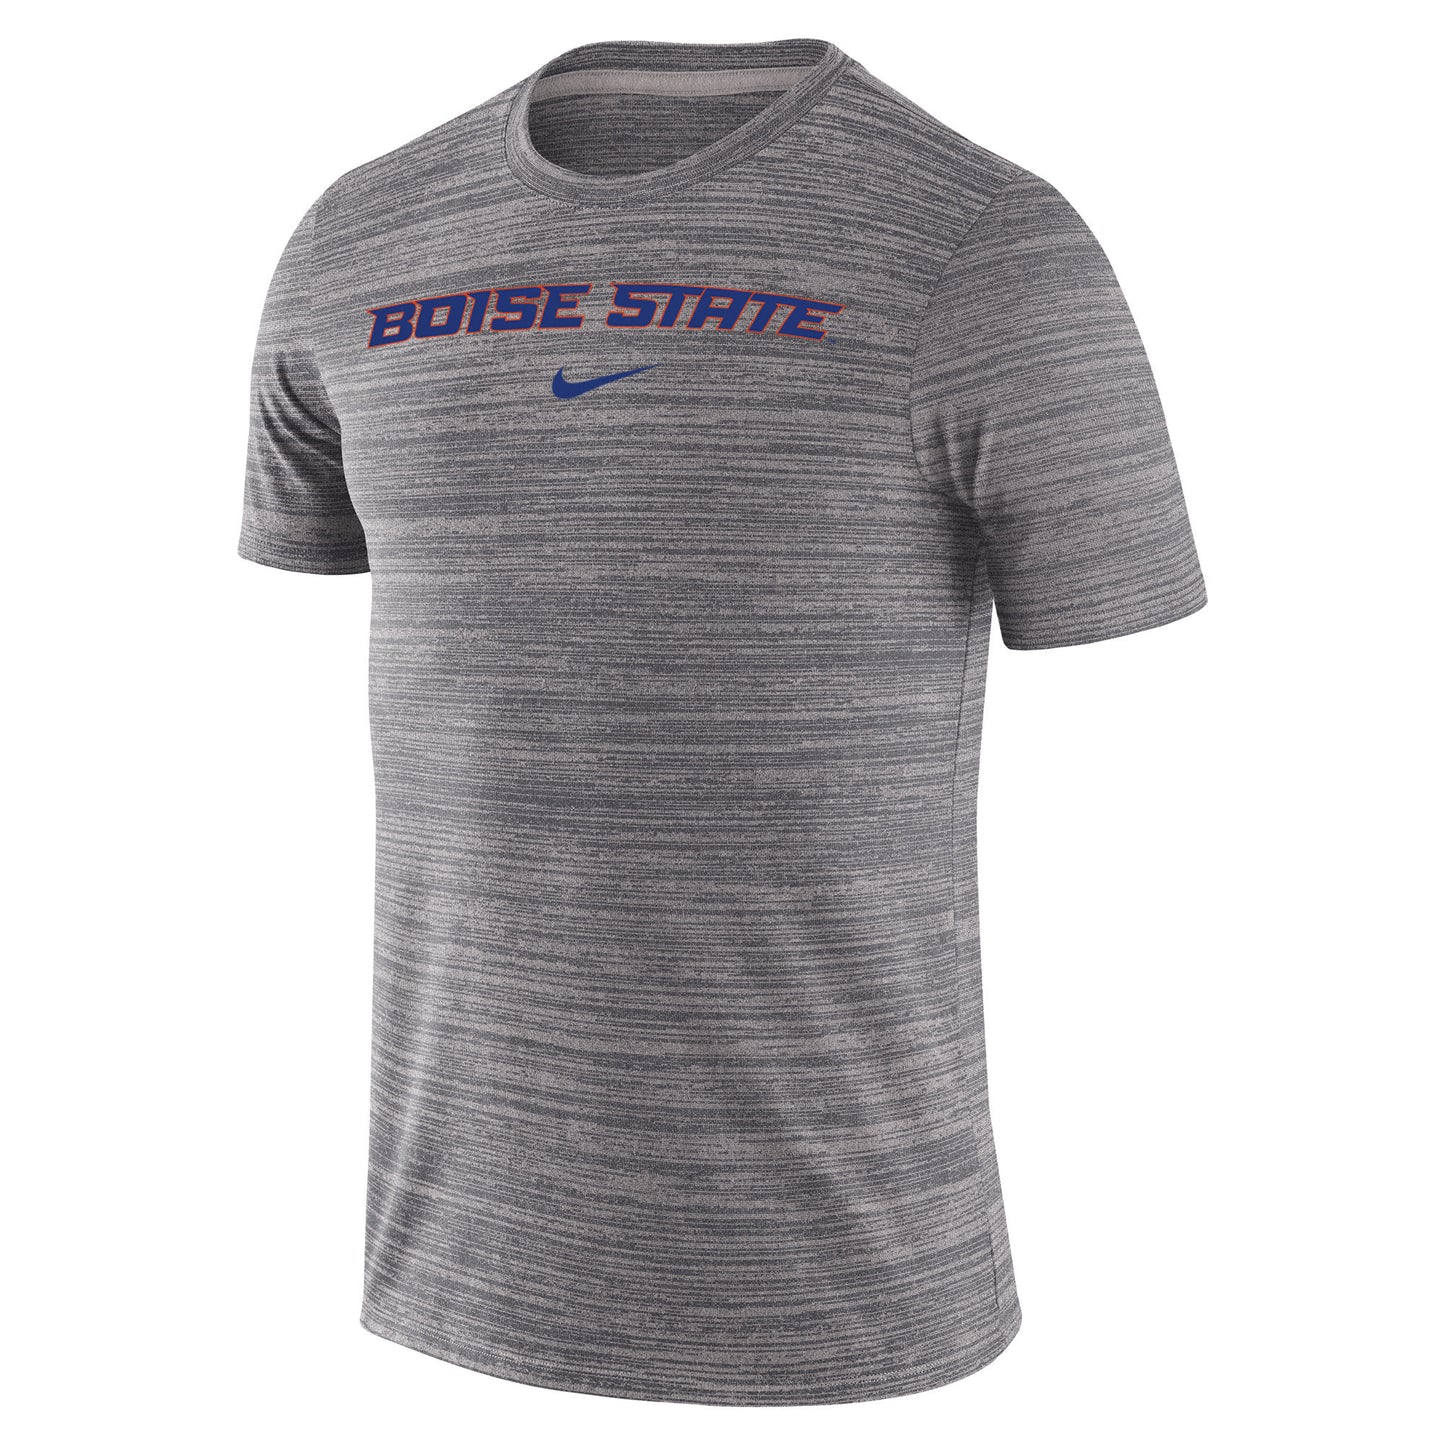 Boise State Broncos Nike Men's "Boise State" Velocity Dri-Fit T-Shirt (Grey)